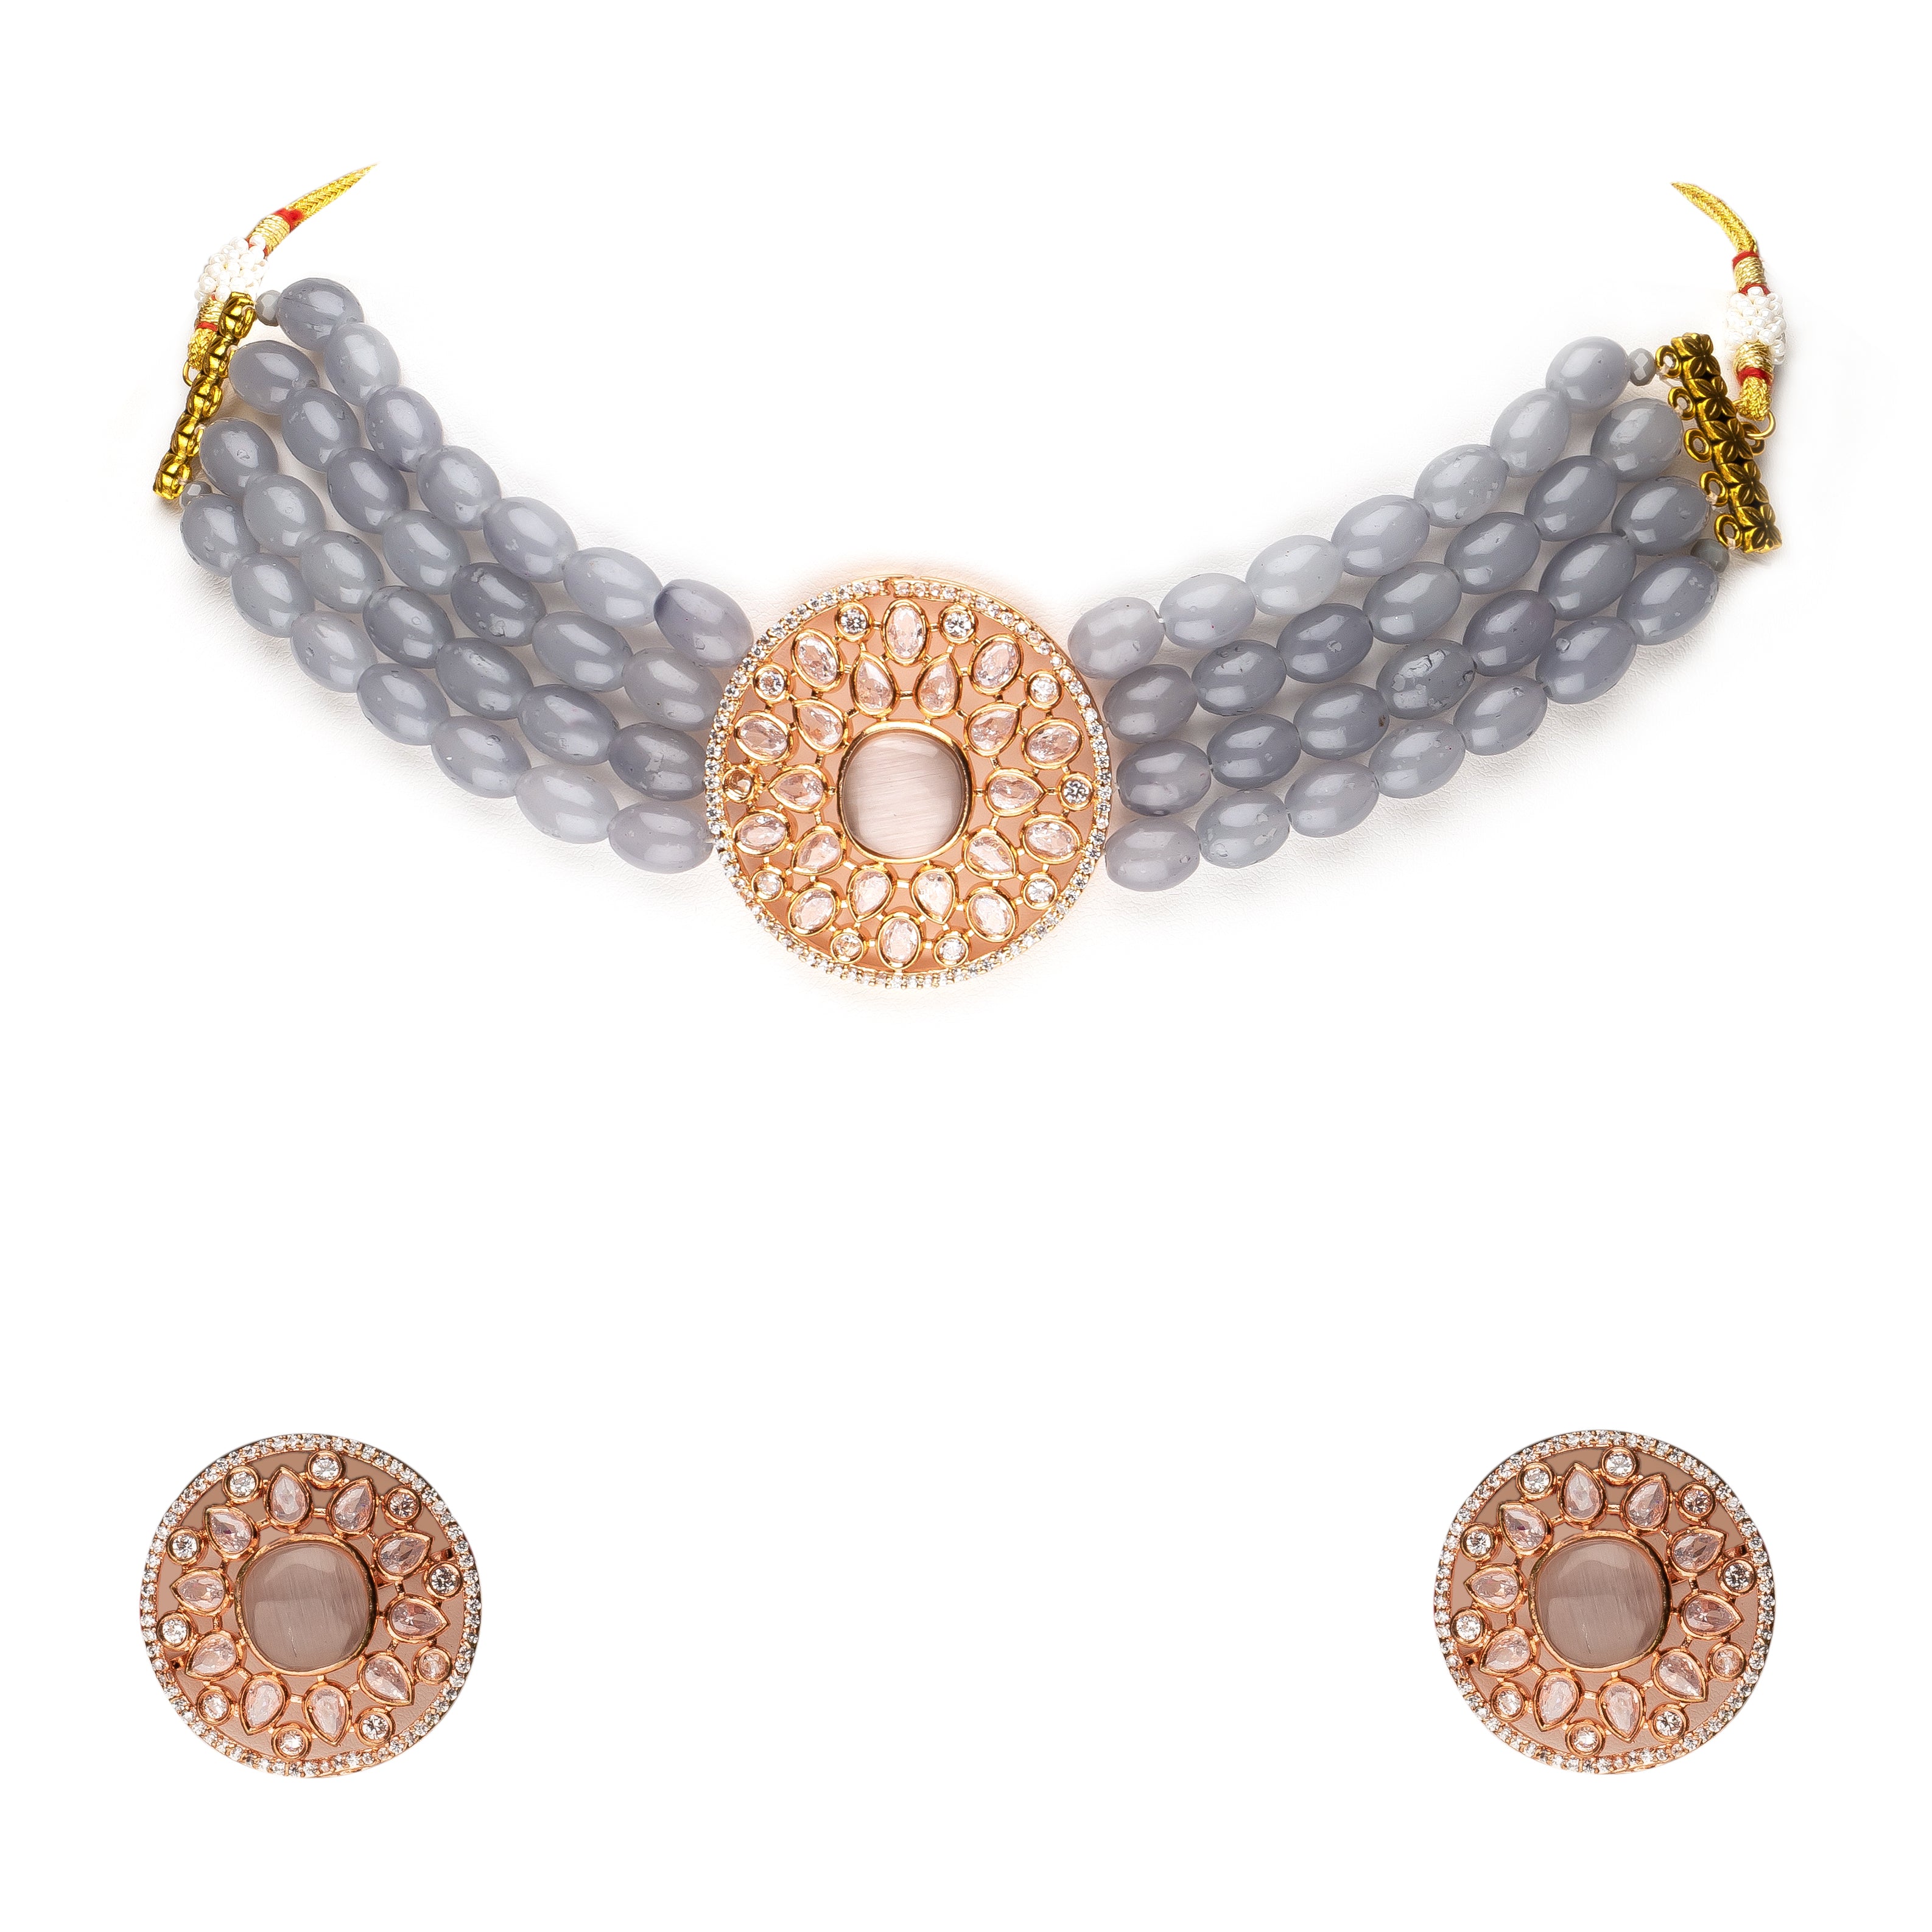 Women's Grey Brass Jewellery Sets with Adjustable Thread - Abhika Creations